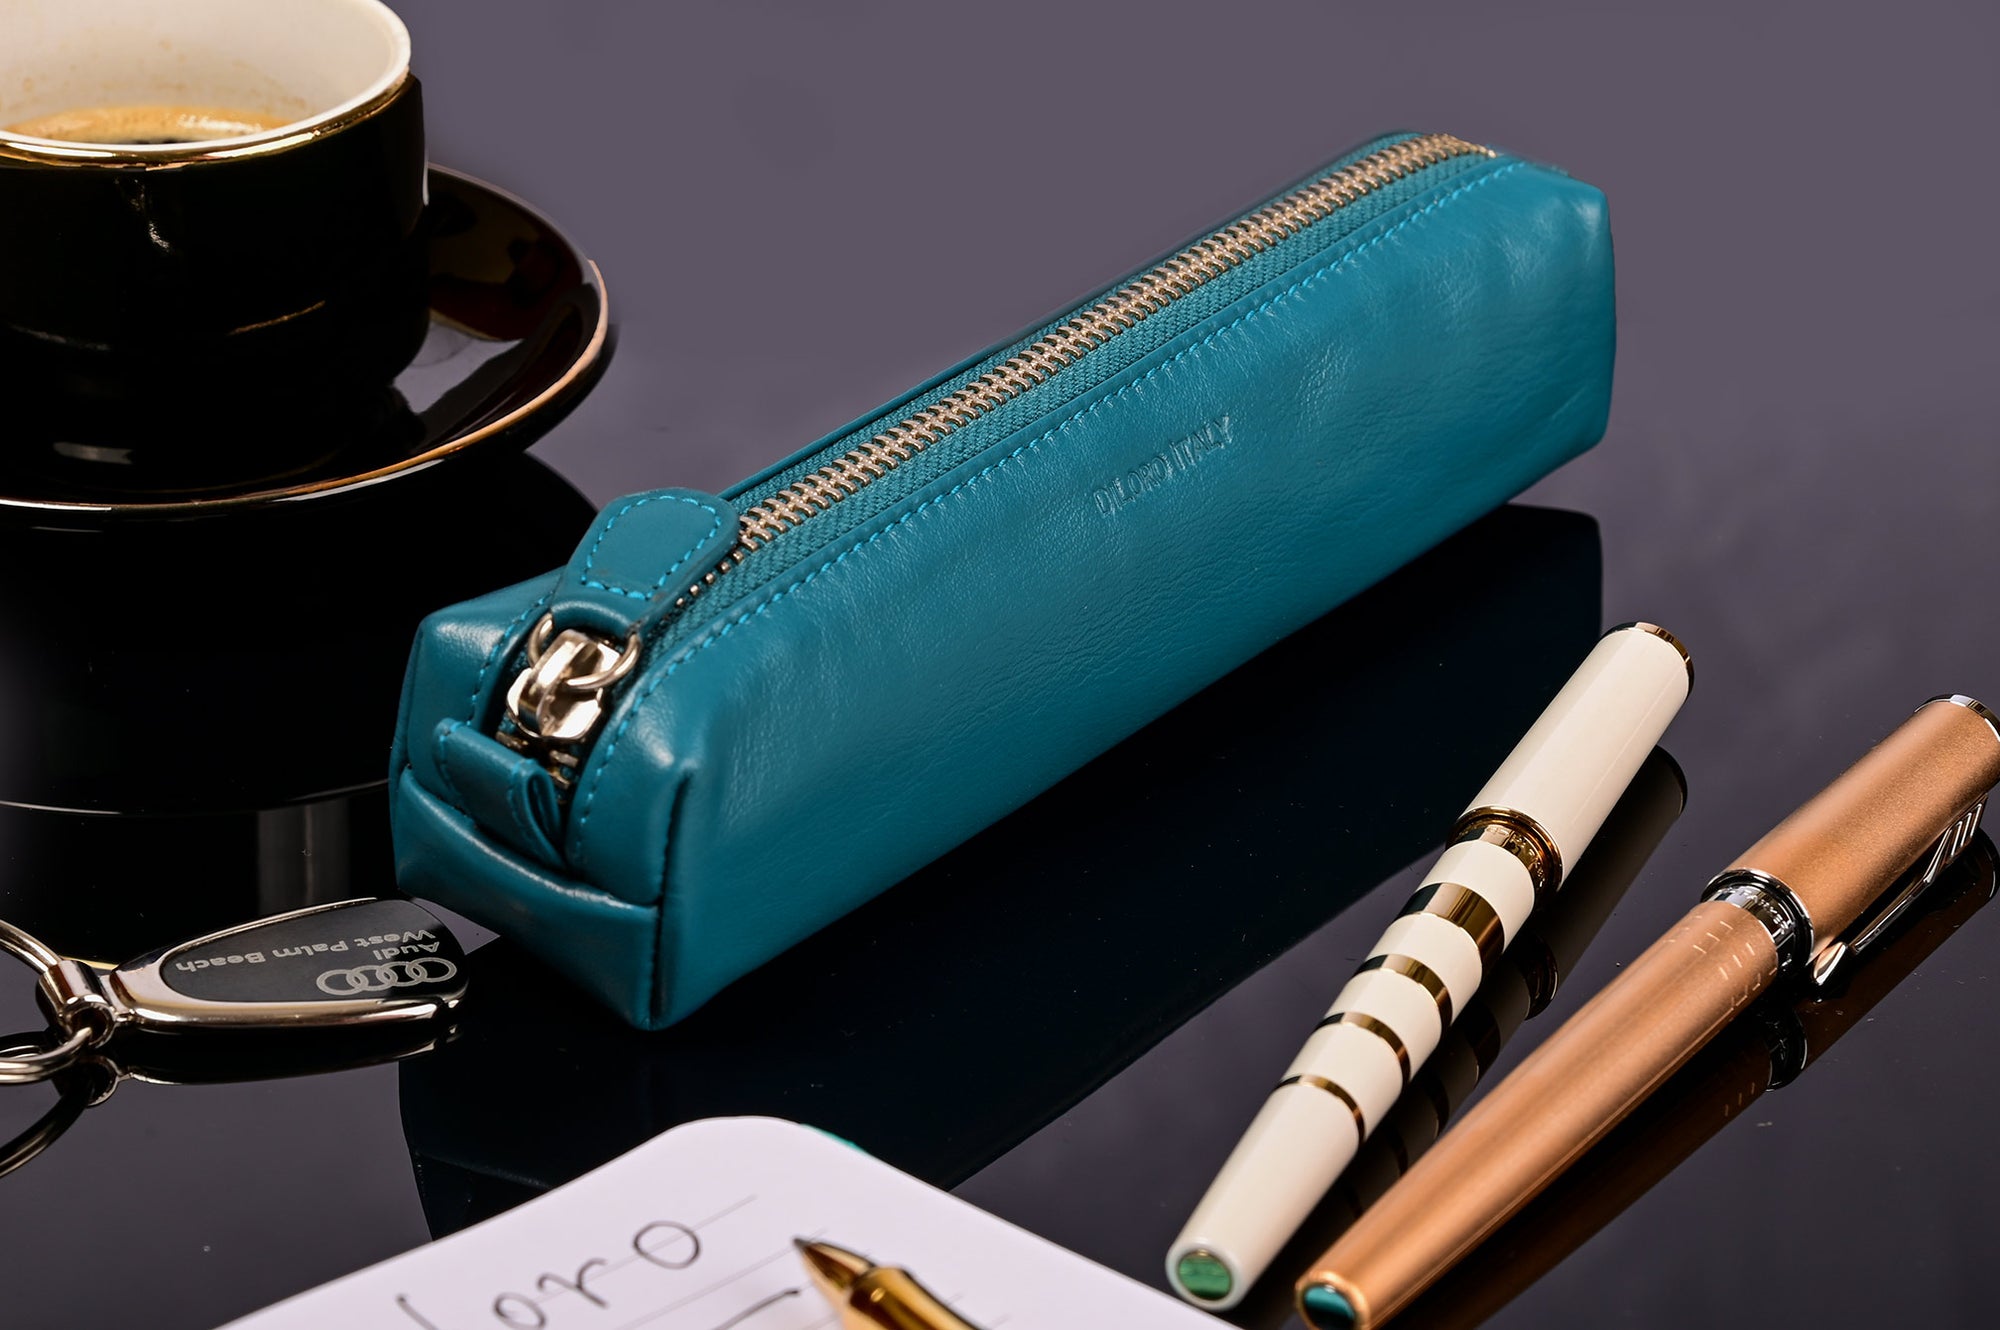 Multi-Purpose Zippered Leather Pen Pencil Case in Blue - Lifestyle Image